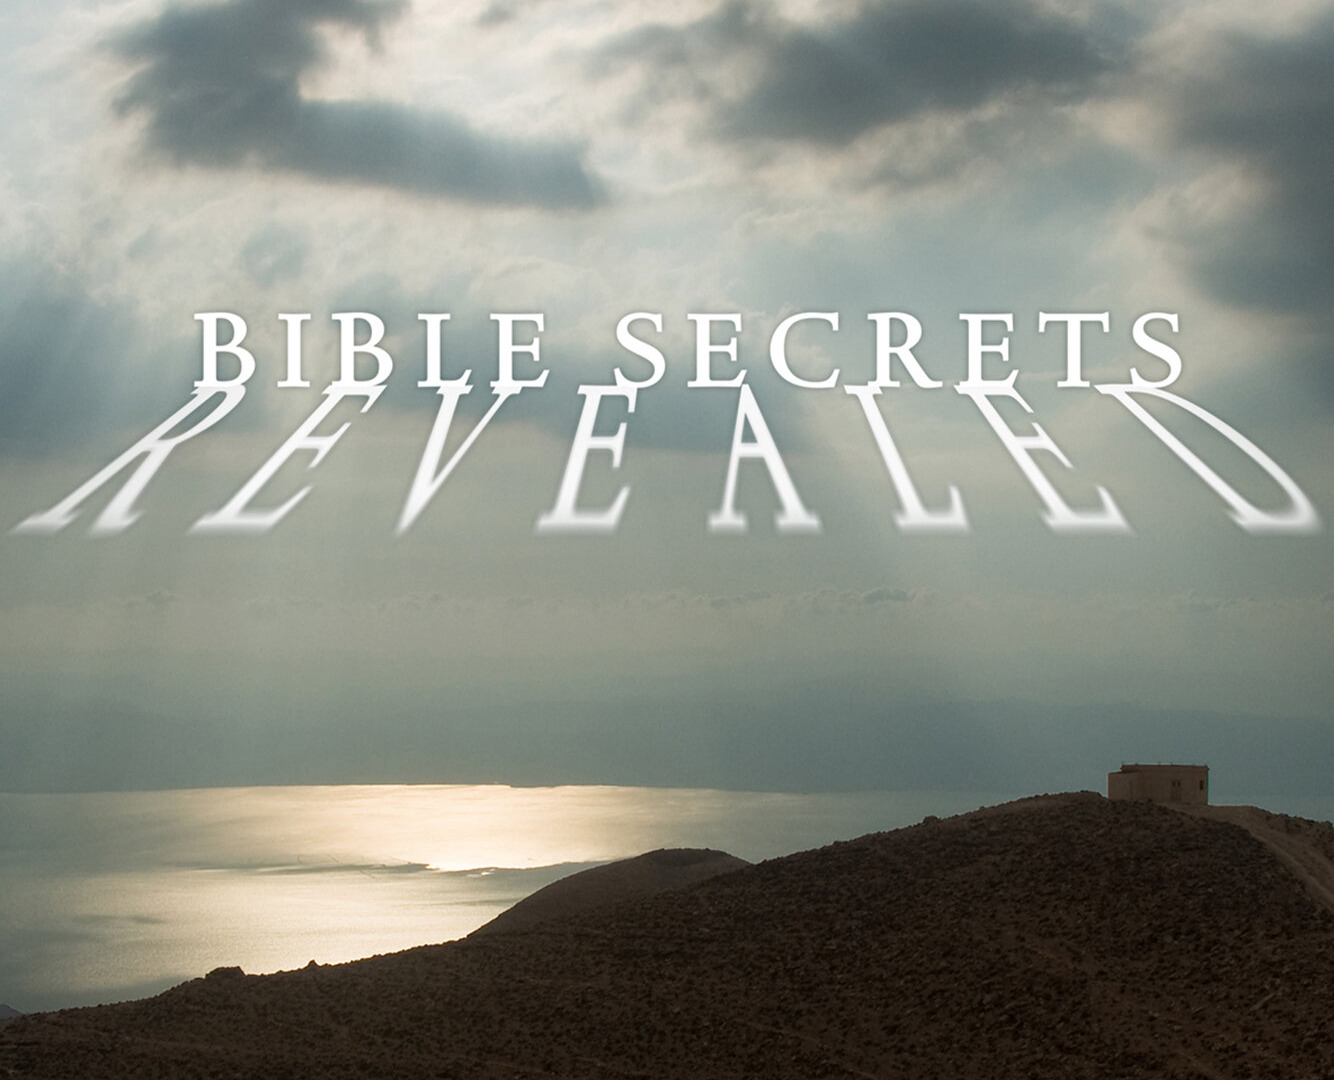 Show Bible Secrets Revealed